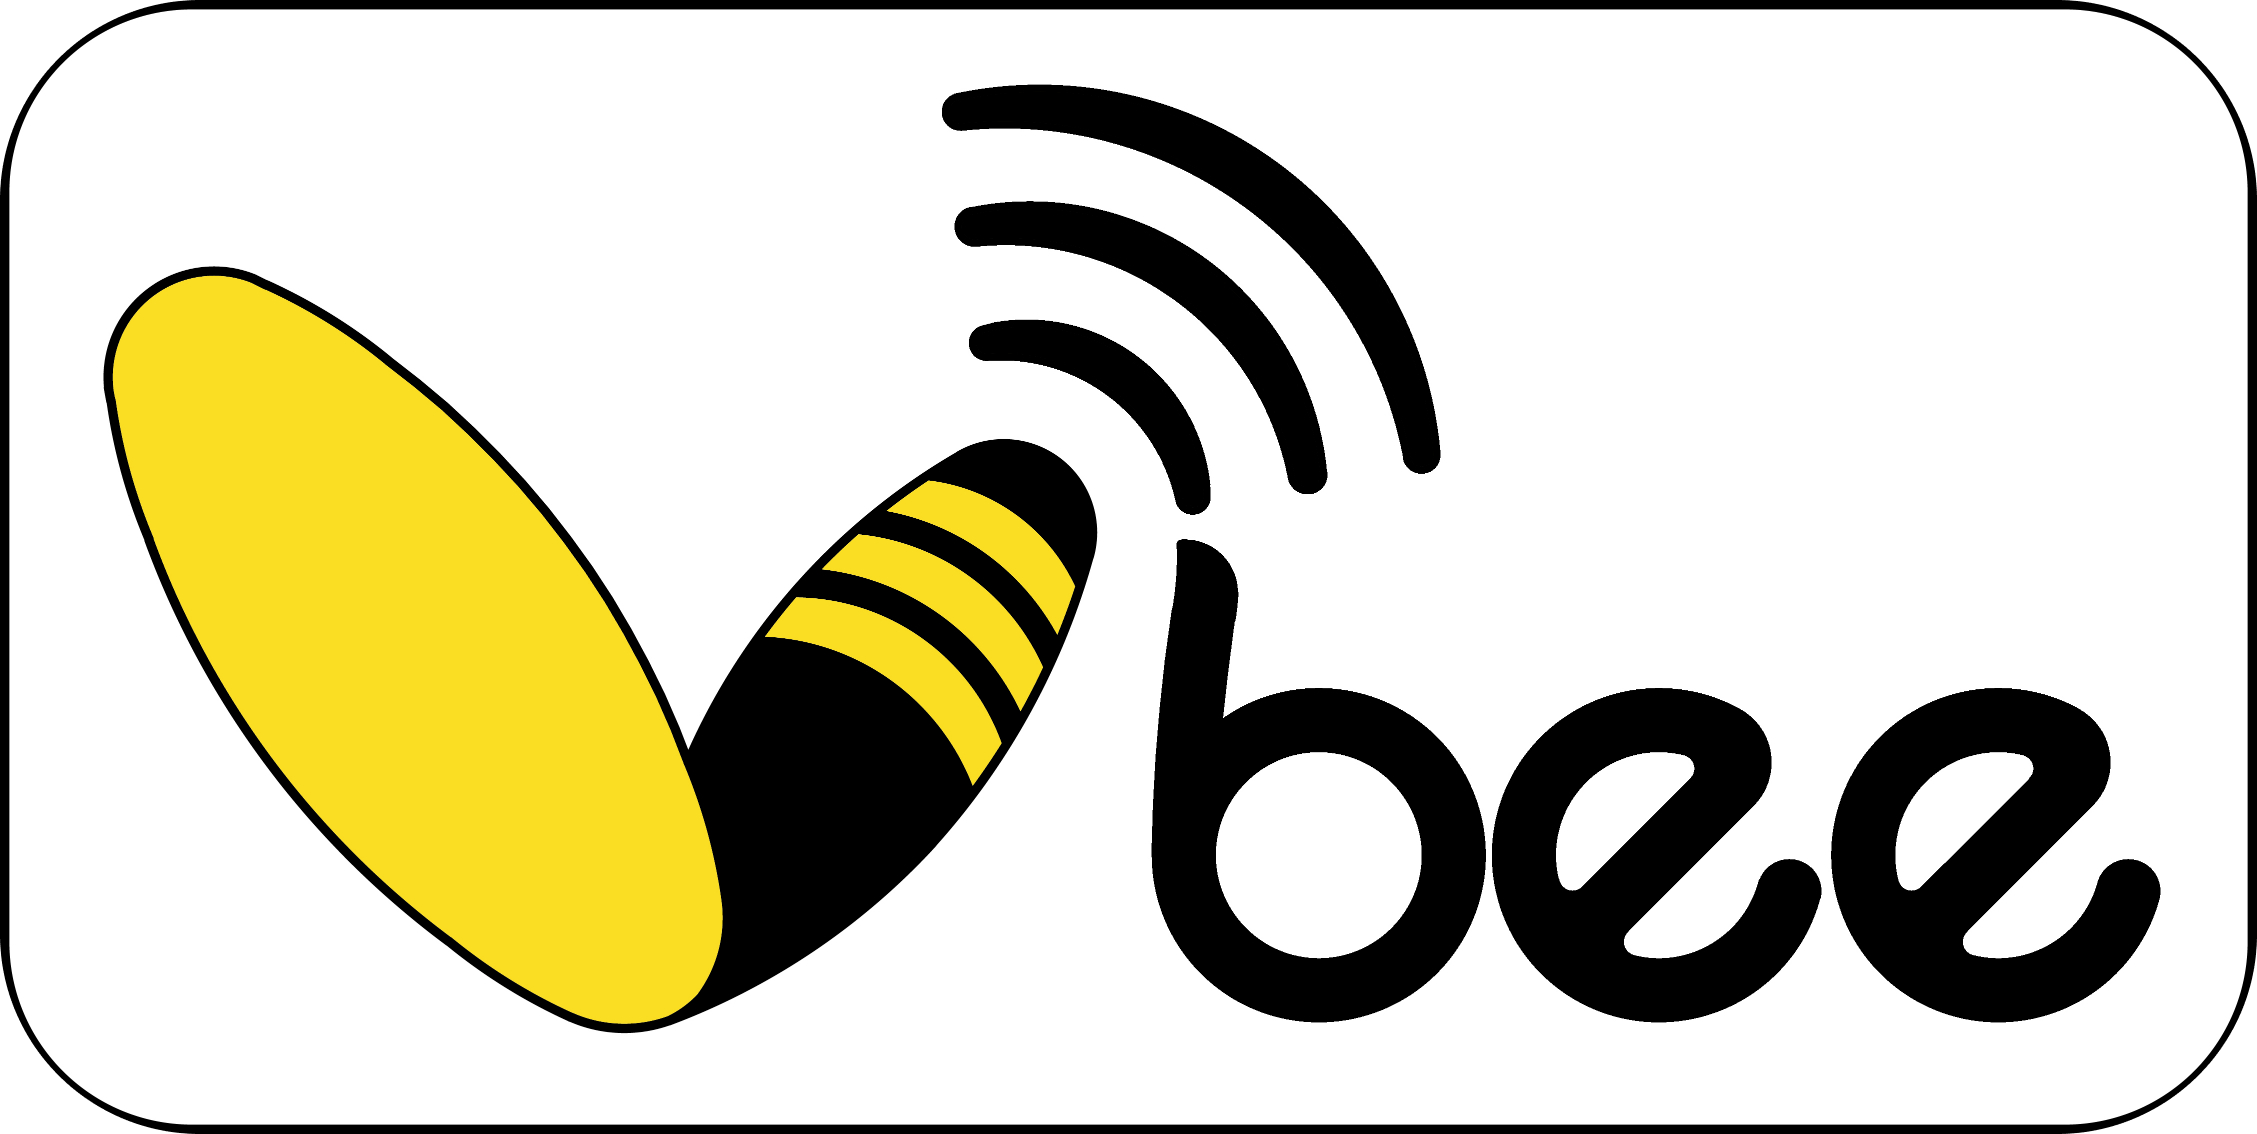 VBEE logo